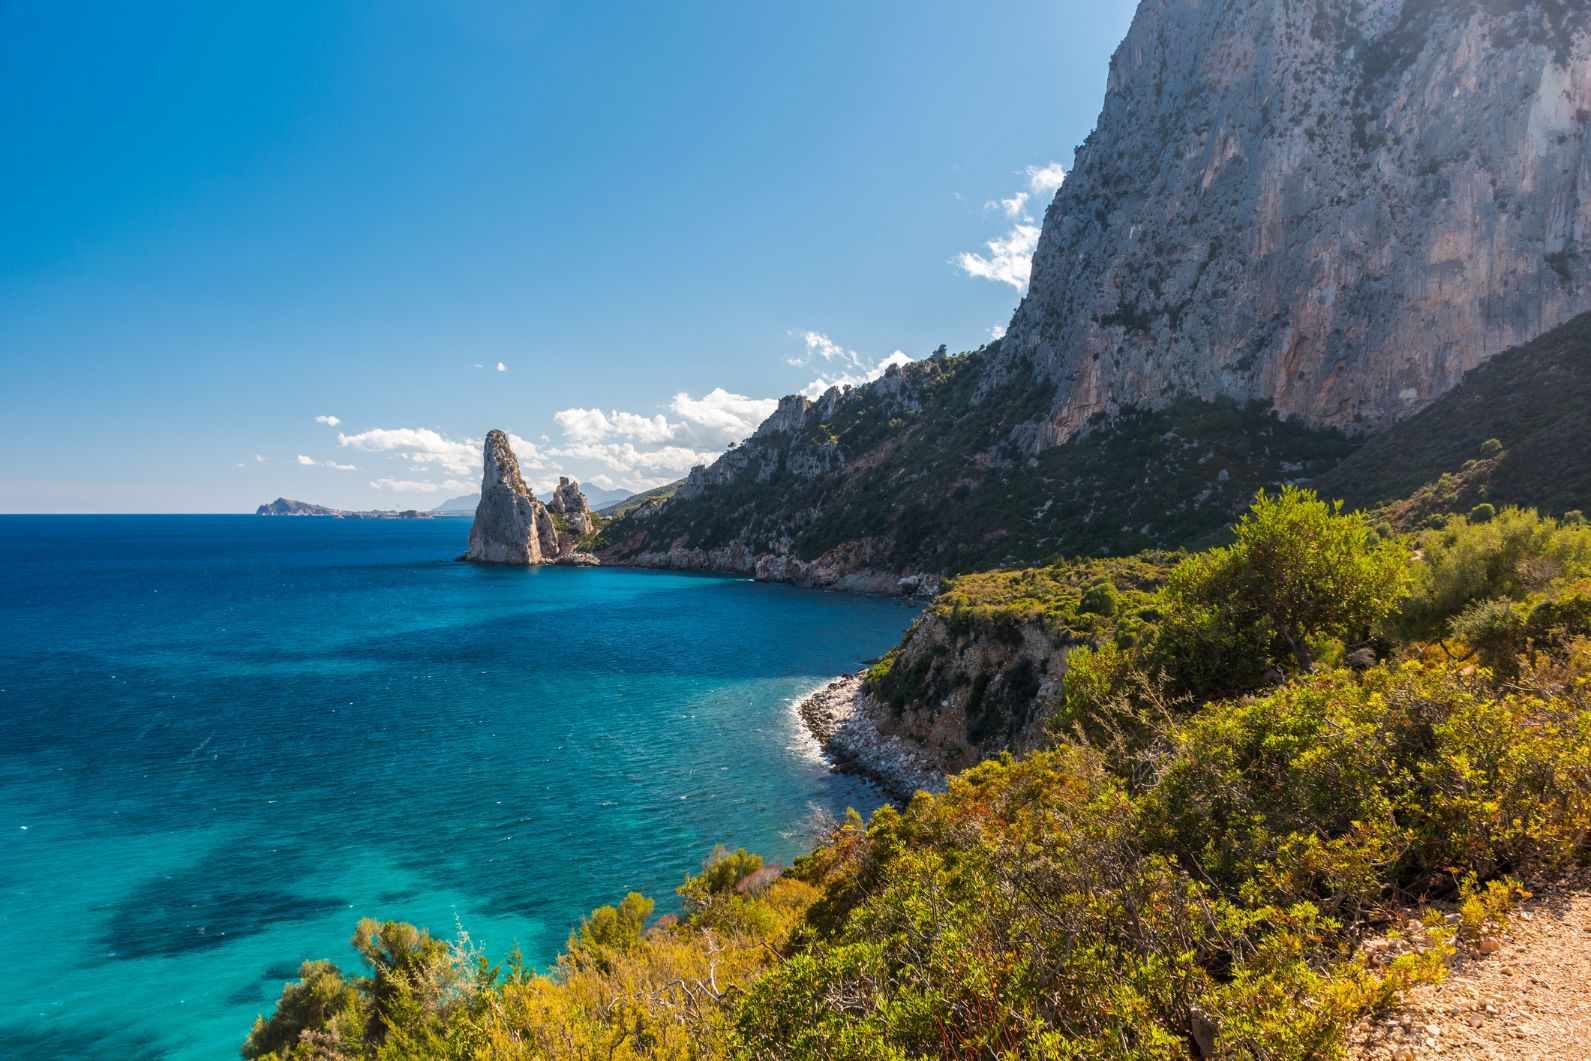 The Sardinian coastline near Santa Maria Navarrese, with the rock pinnacle of Pedra Longa in the background. Photo: Getty